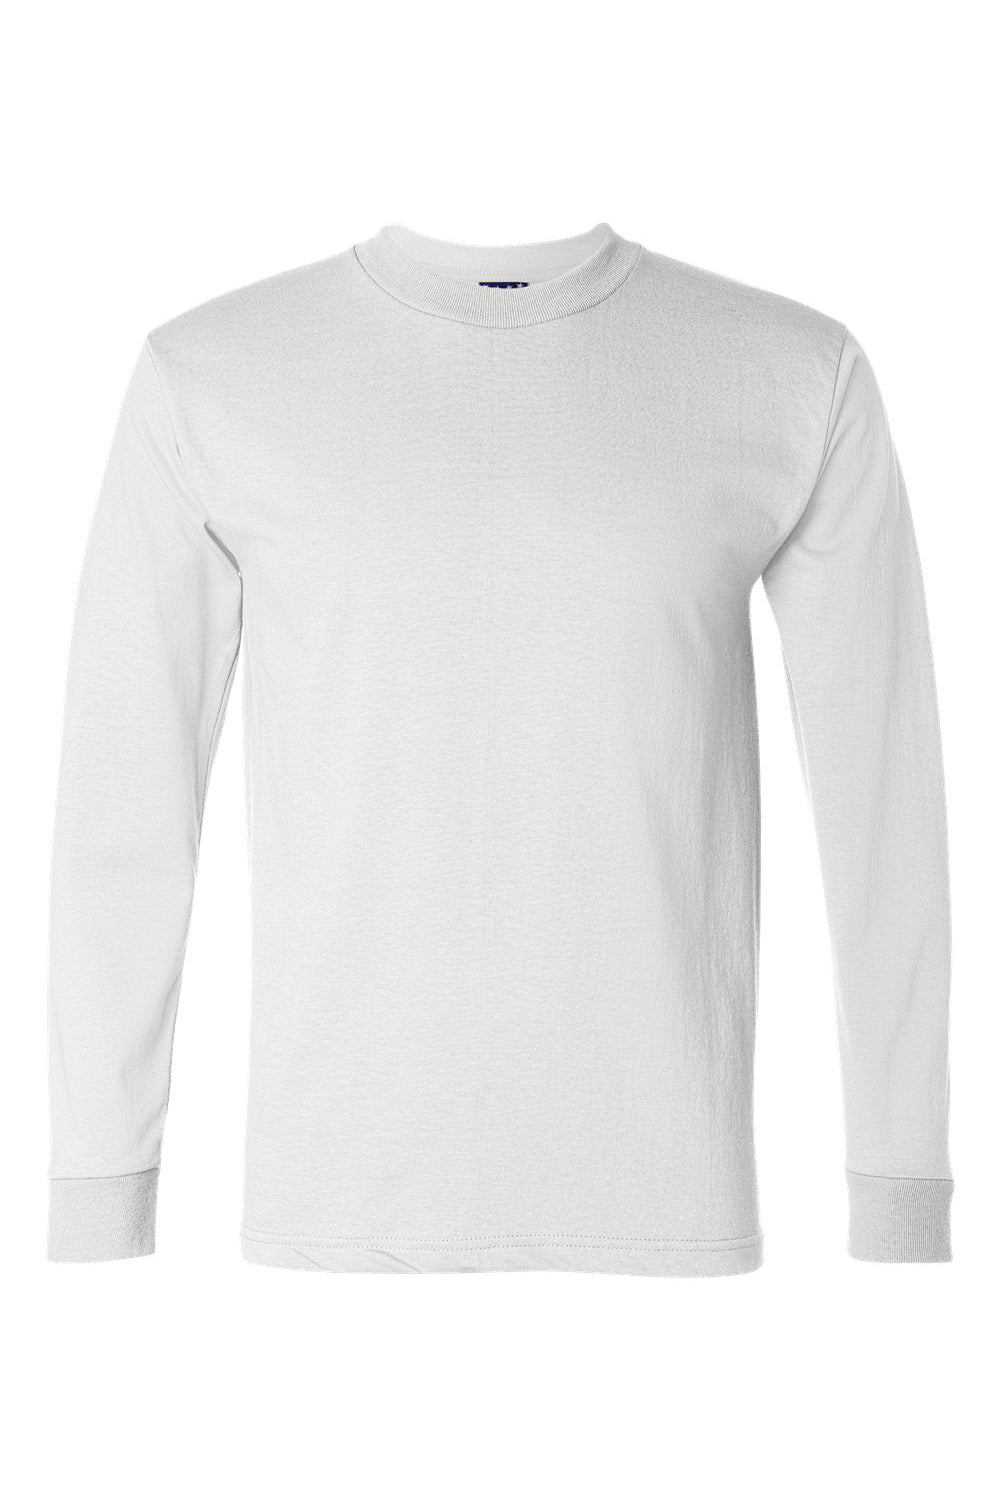 Bayside BA2955 Mens USA Made Long Sleeve Crewneck T-Shirt White Flat Front